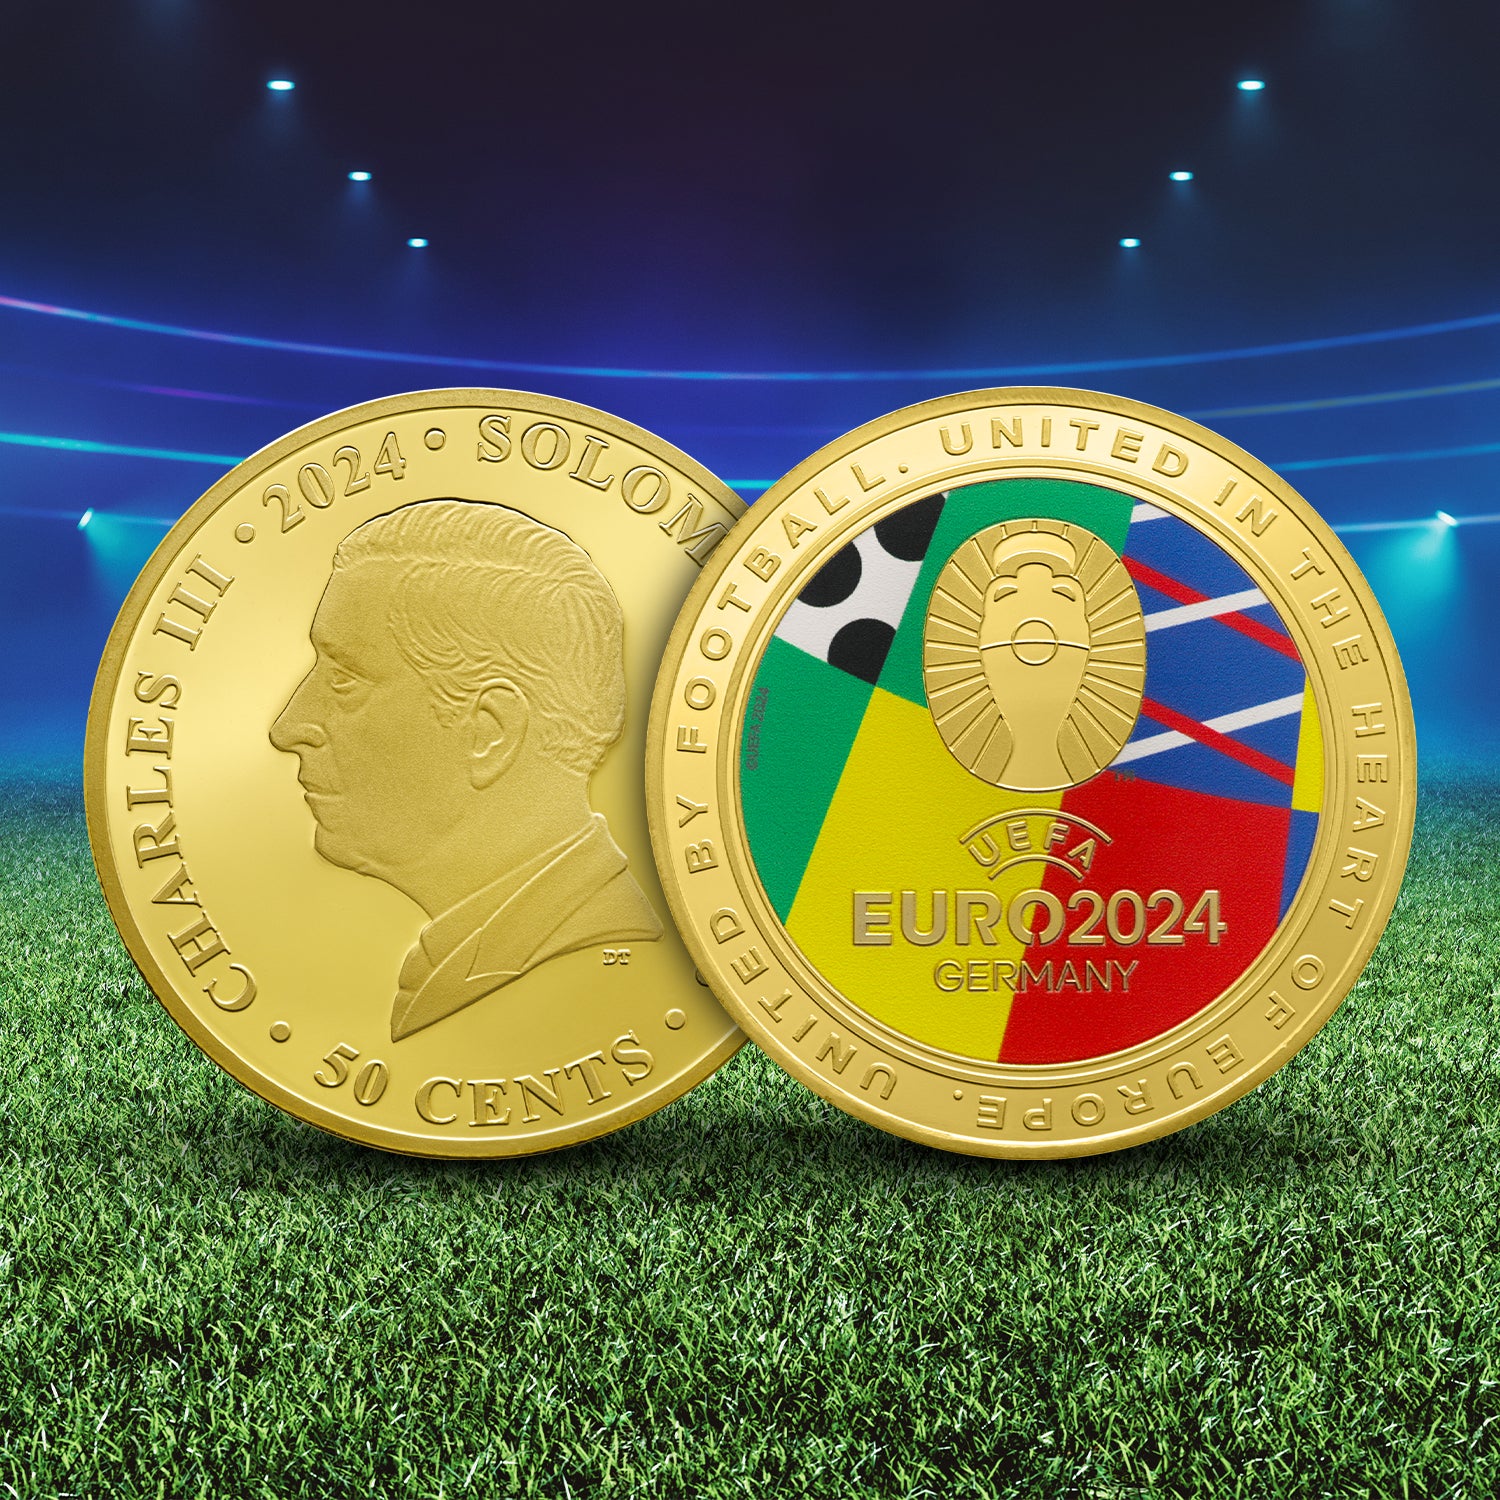 Official UEFA Euro 2024 Gold Edition Coin